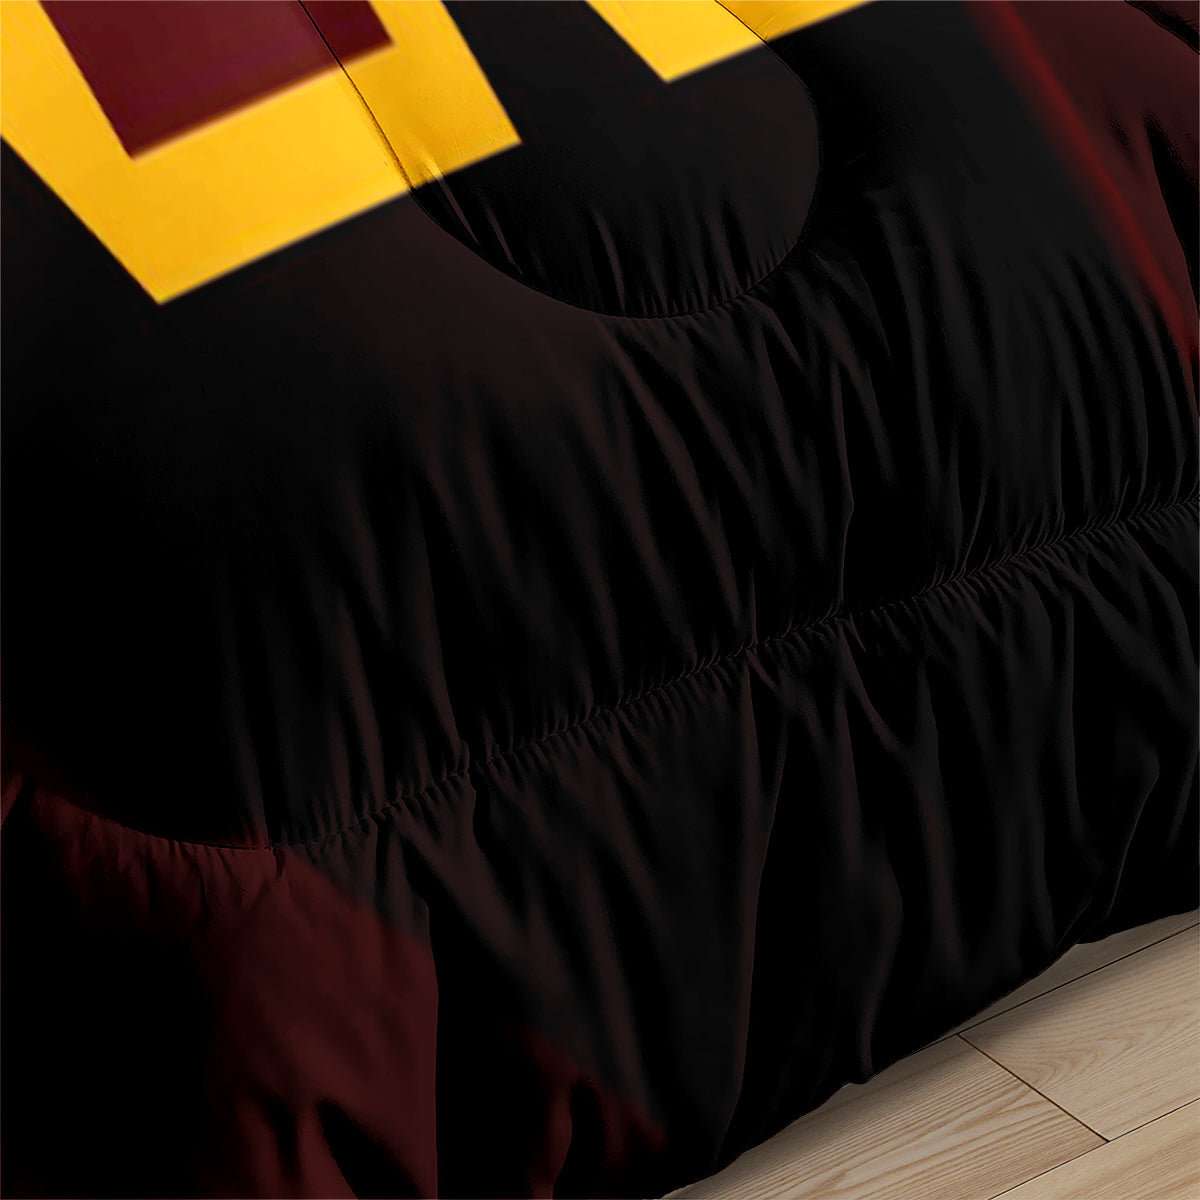 Washington Commanders Football Team Comforter Pillowcase Sets Blanket All Season Reversible Quilted Duvet